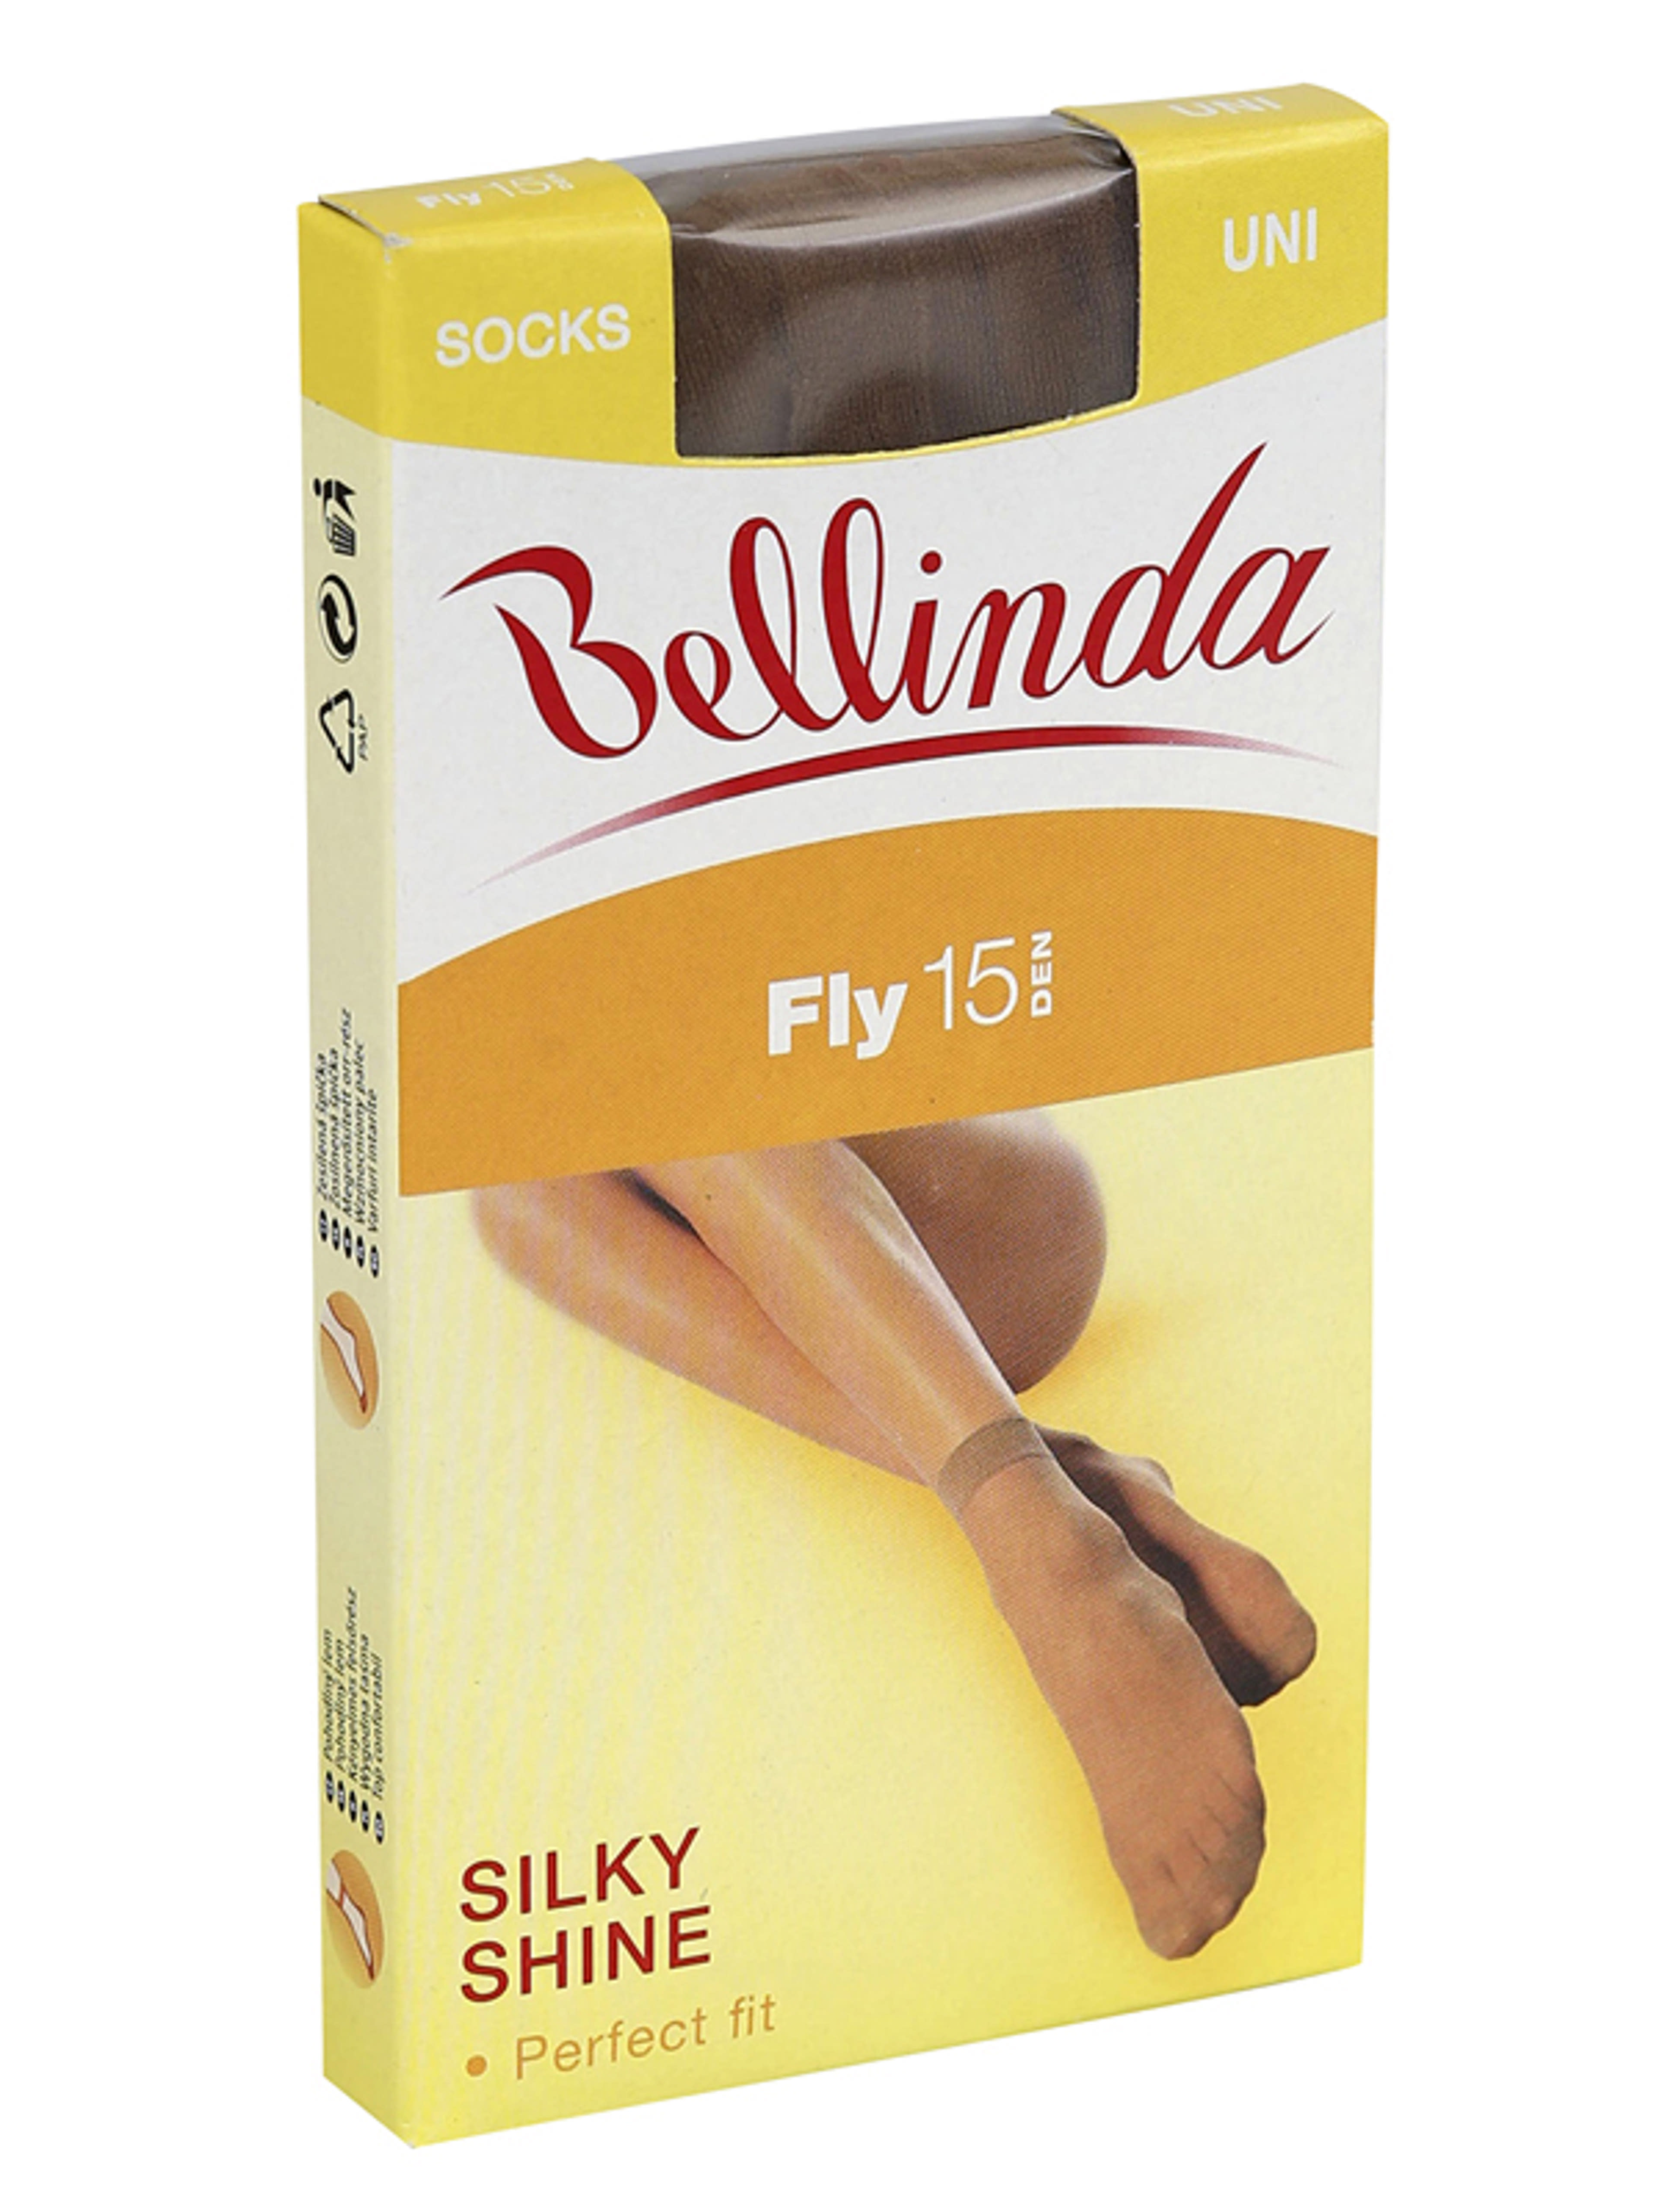 Bellinda Fly 15 Den Bronz Bokafix - 1 db